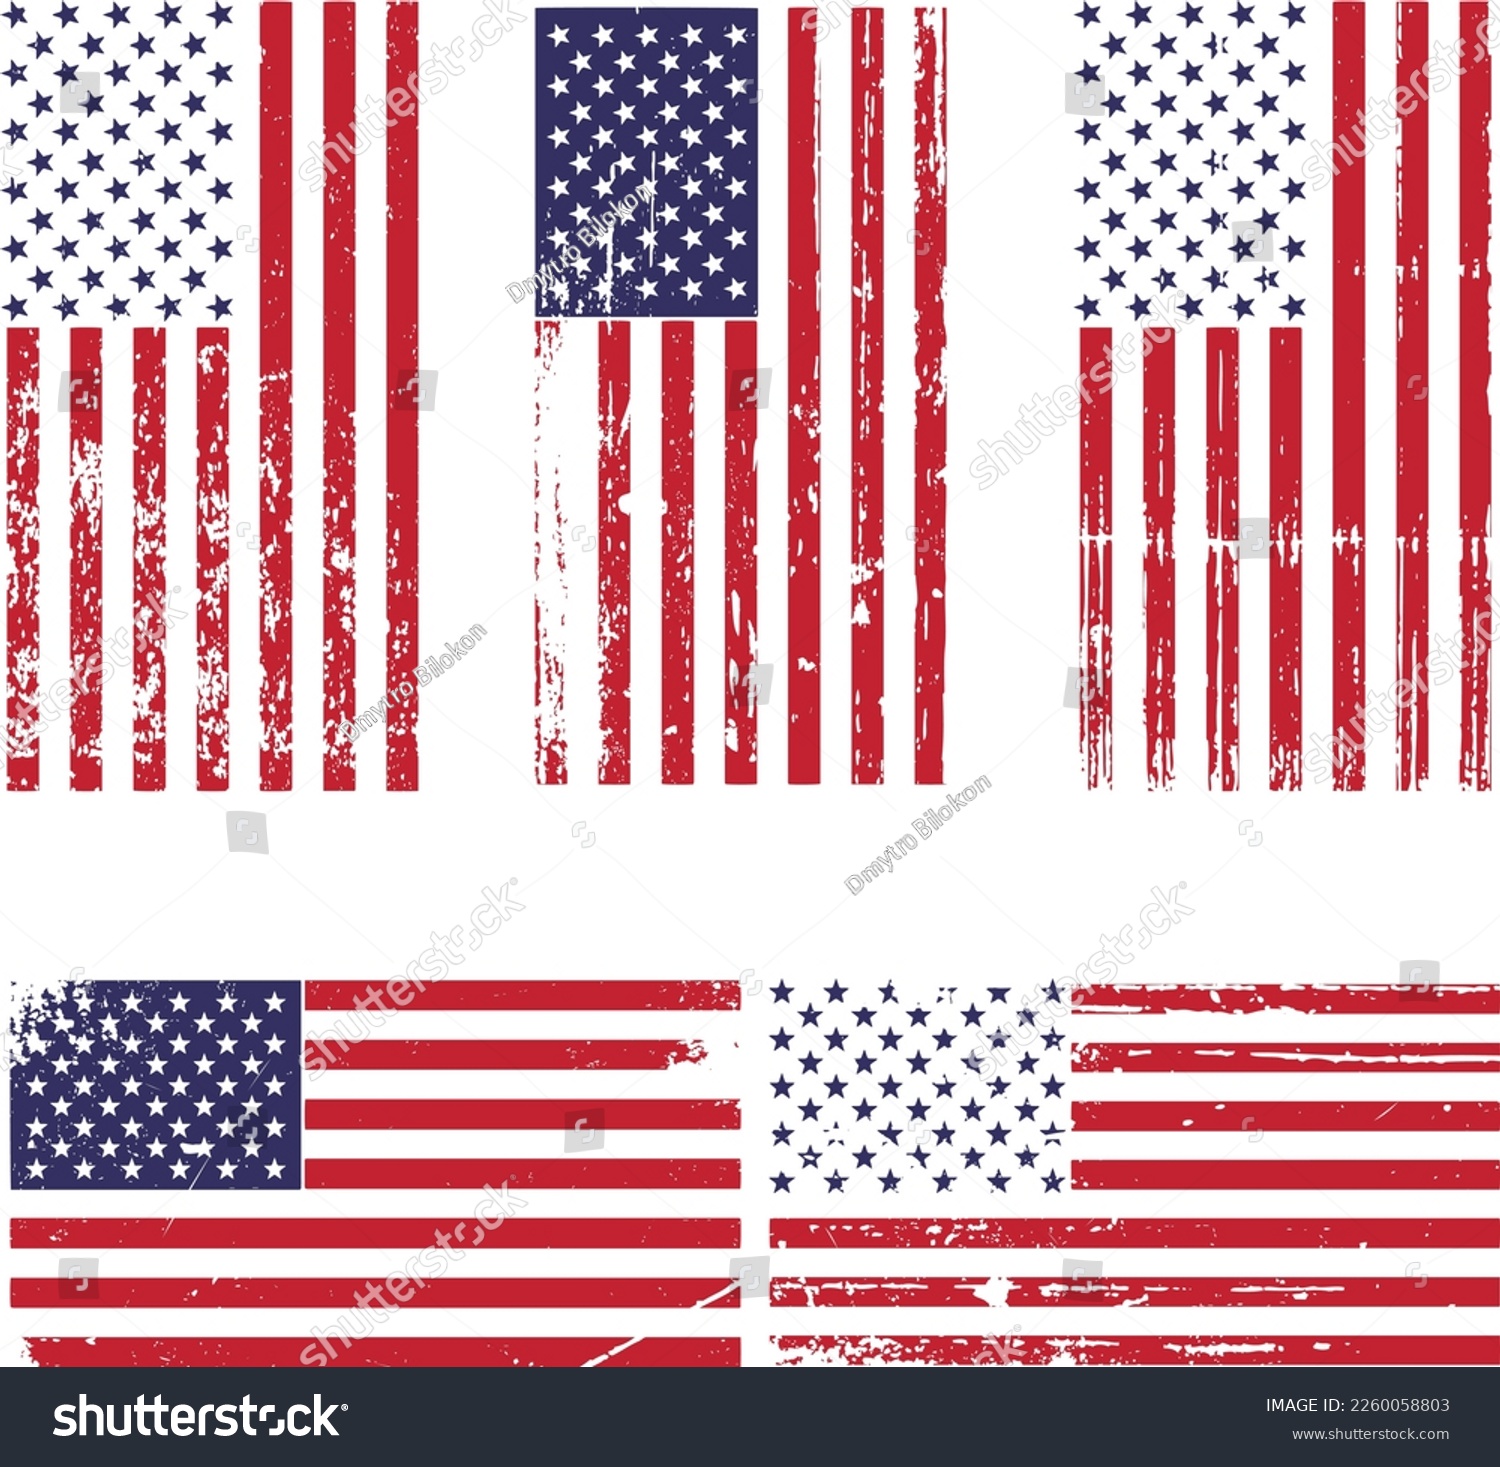 SVG of Grunge American flag, USA flag, SVG Vector svg